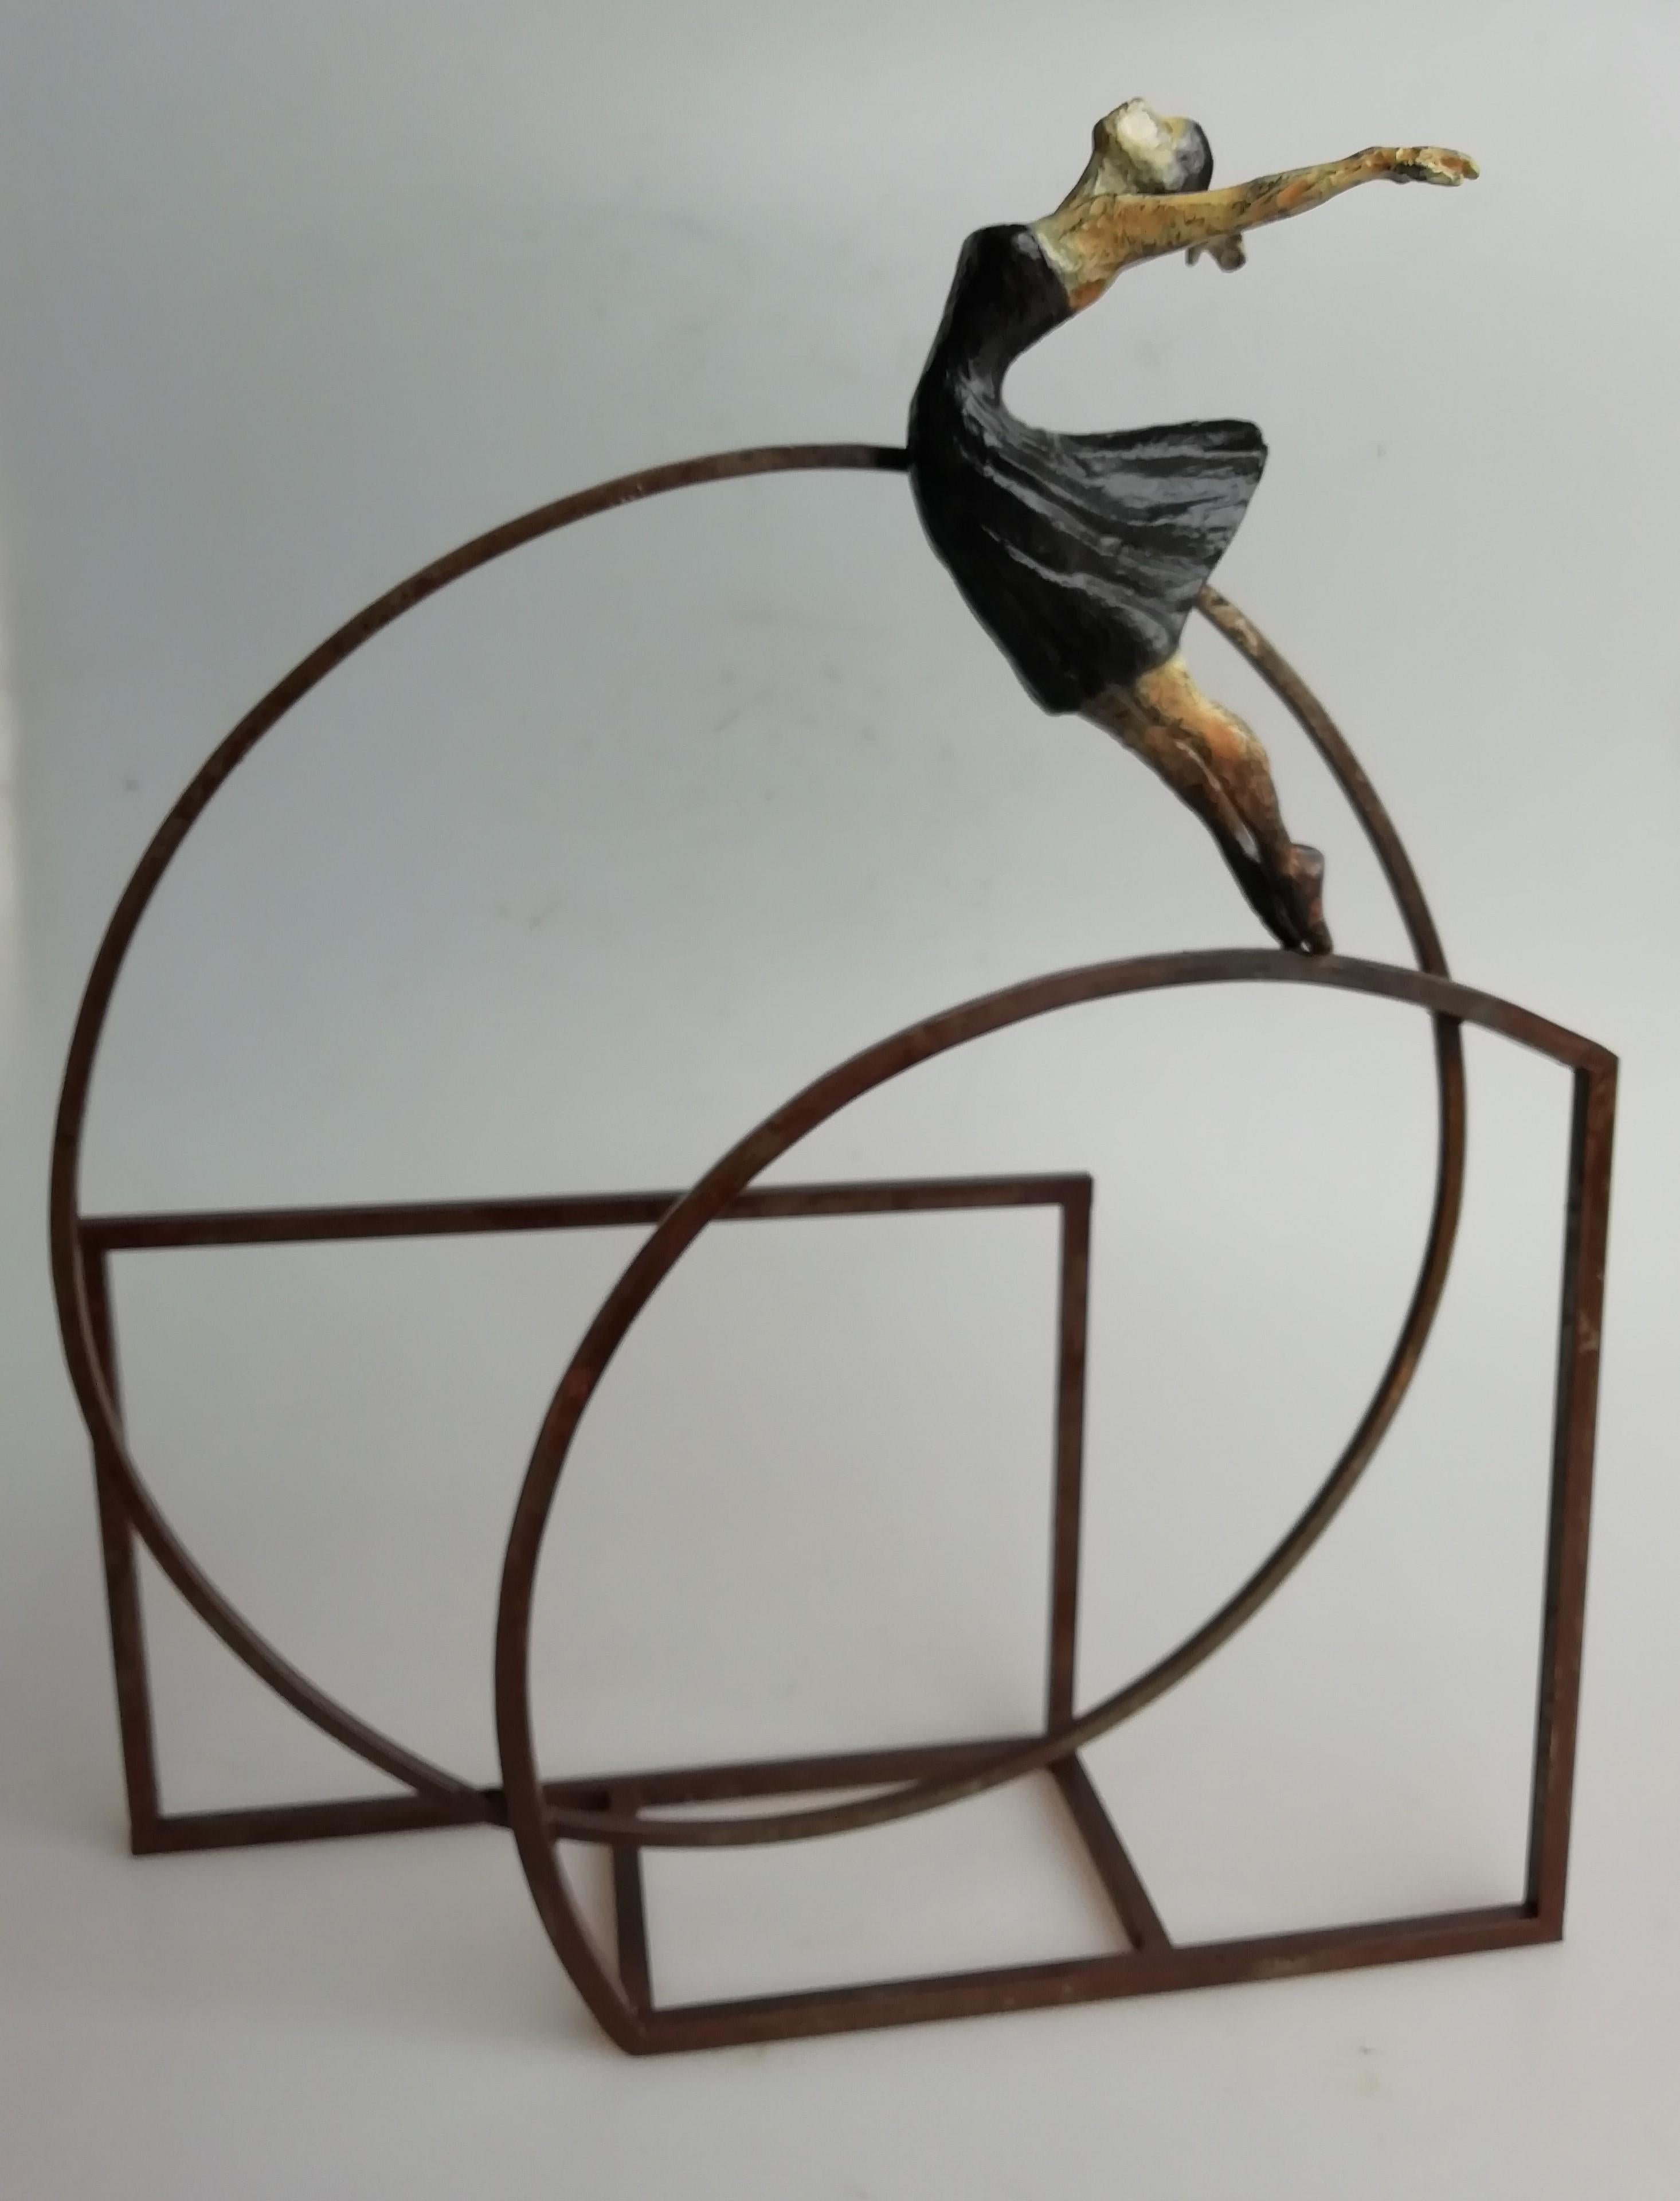 Joan Artigas Planas Figurative Sculpture - "Victory" contemporary bronze table, mural sculpture figurative girl freedom